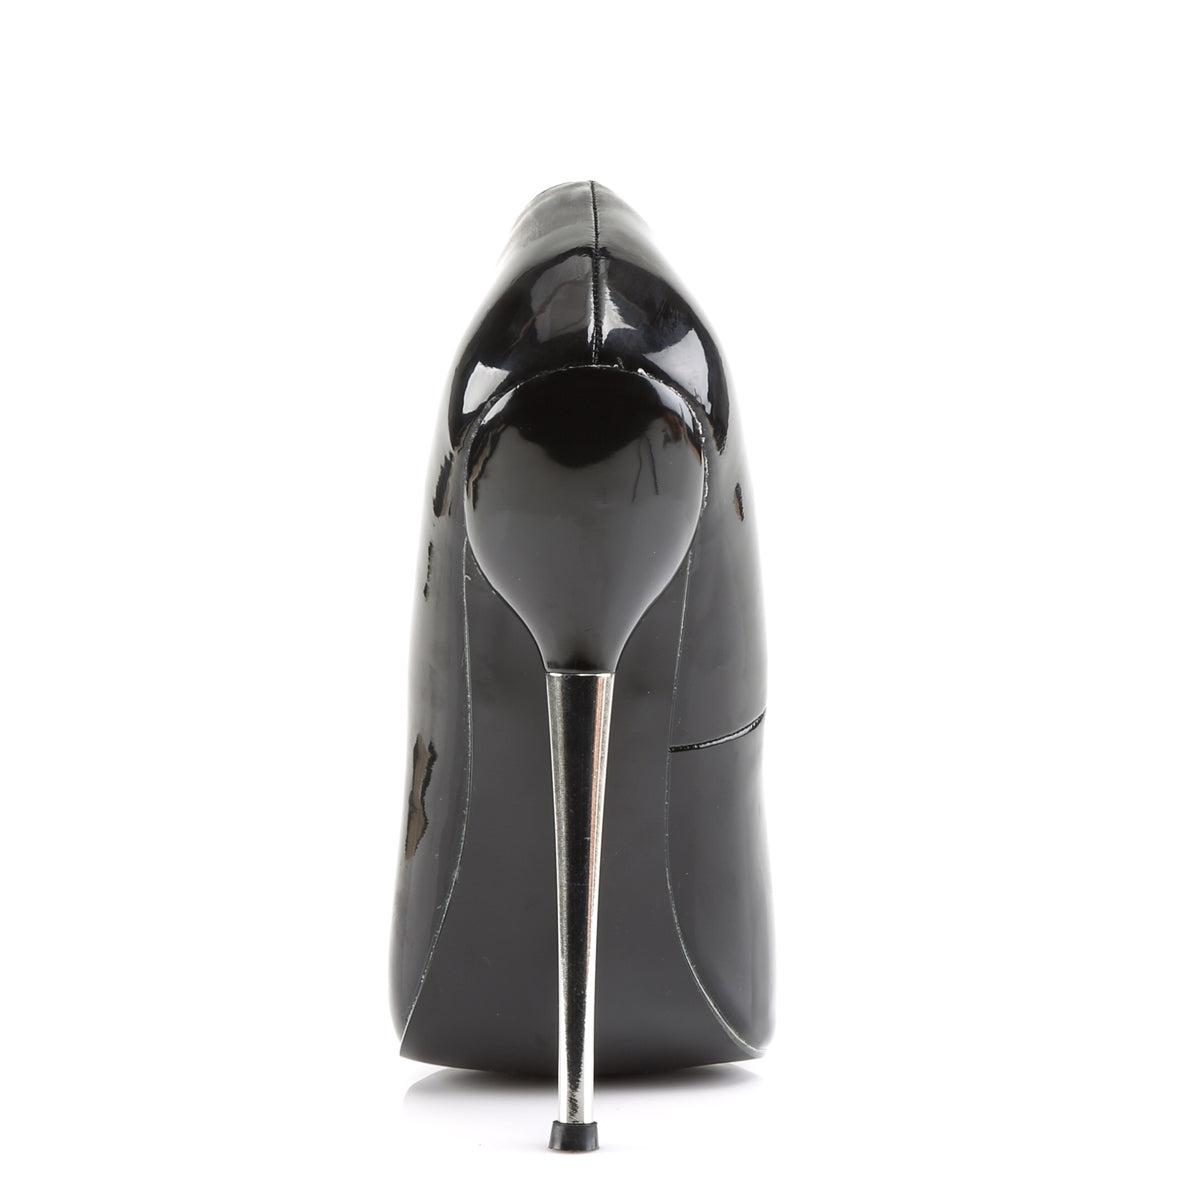 DAGGER-01 Devious Heels Black Patent Single Soles [Fetish Heels]